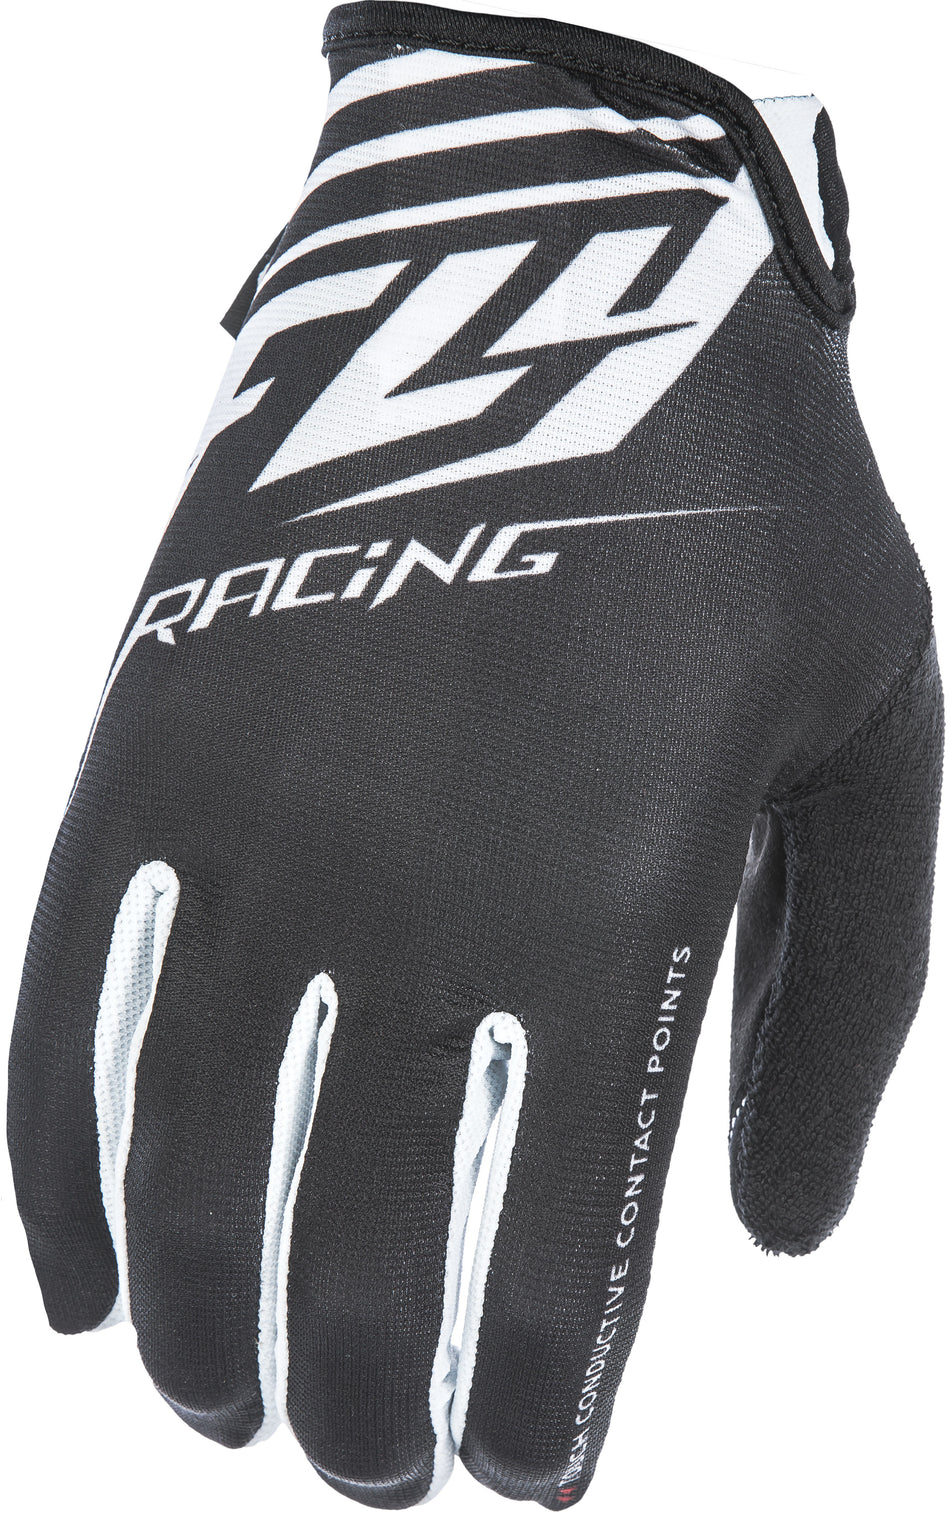 FLY RACING Media Gloves Black/White Sz 12 350-07412